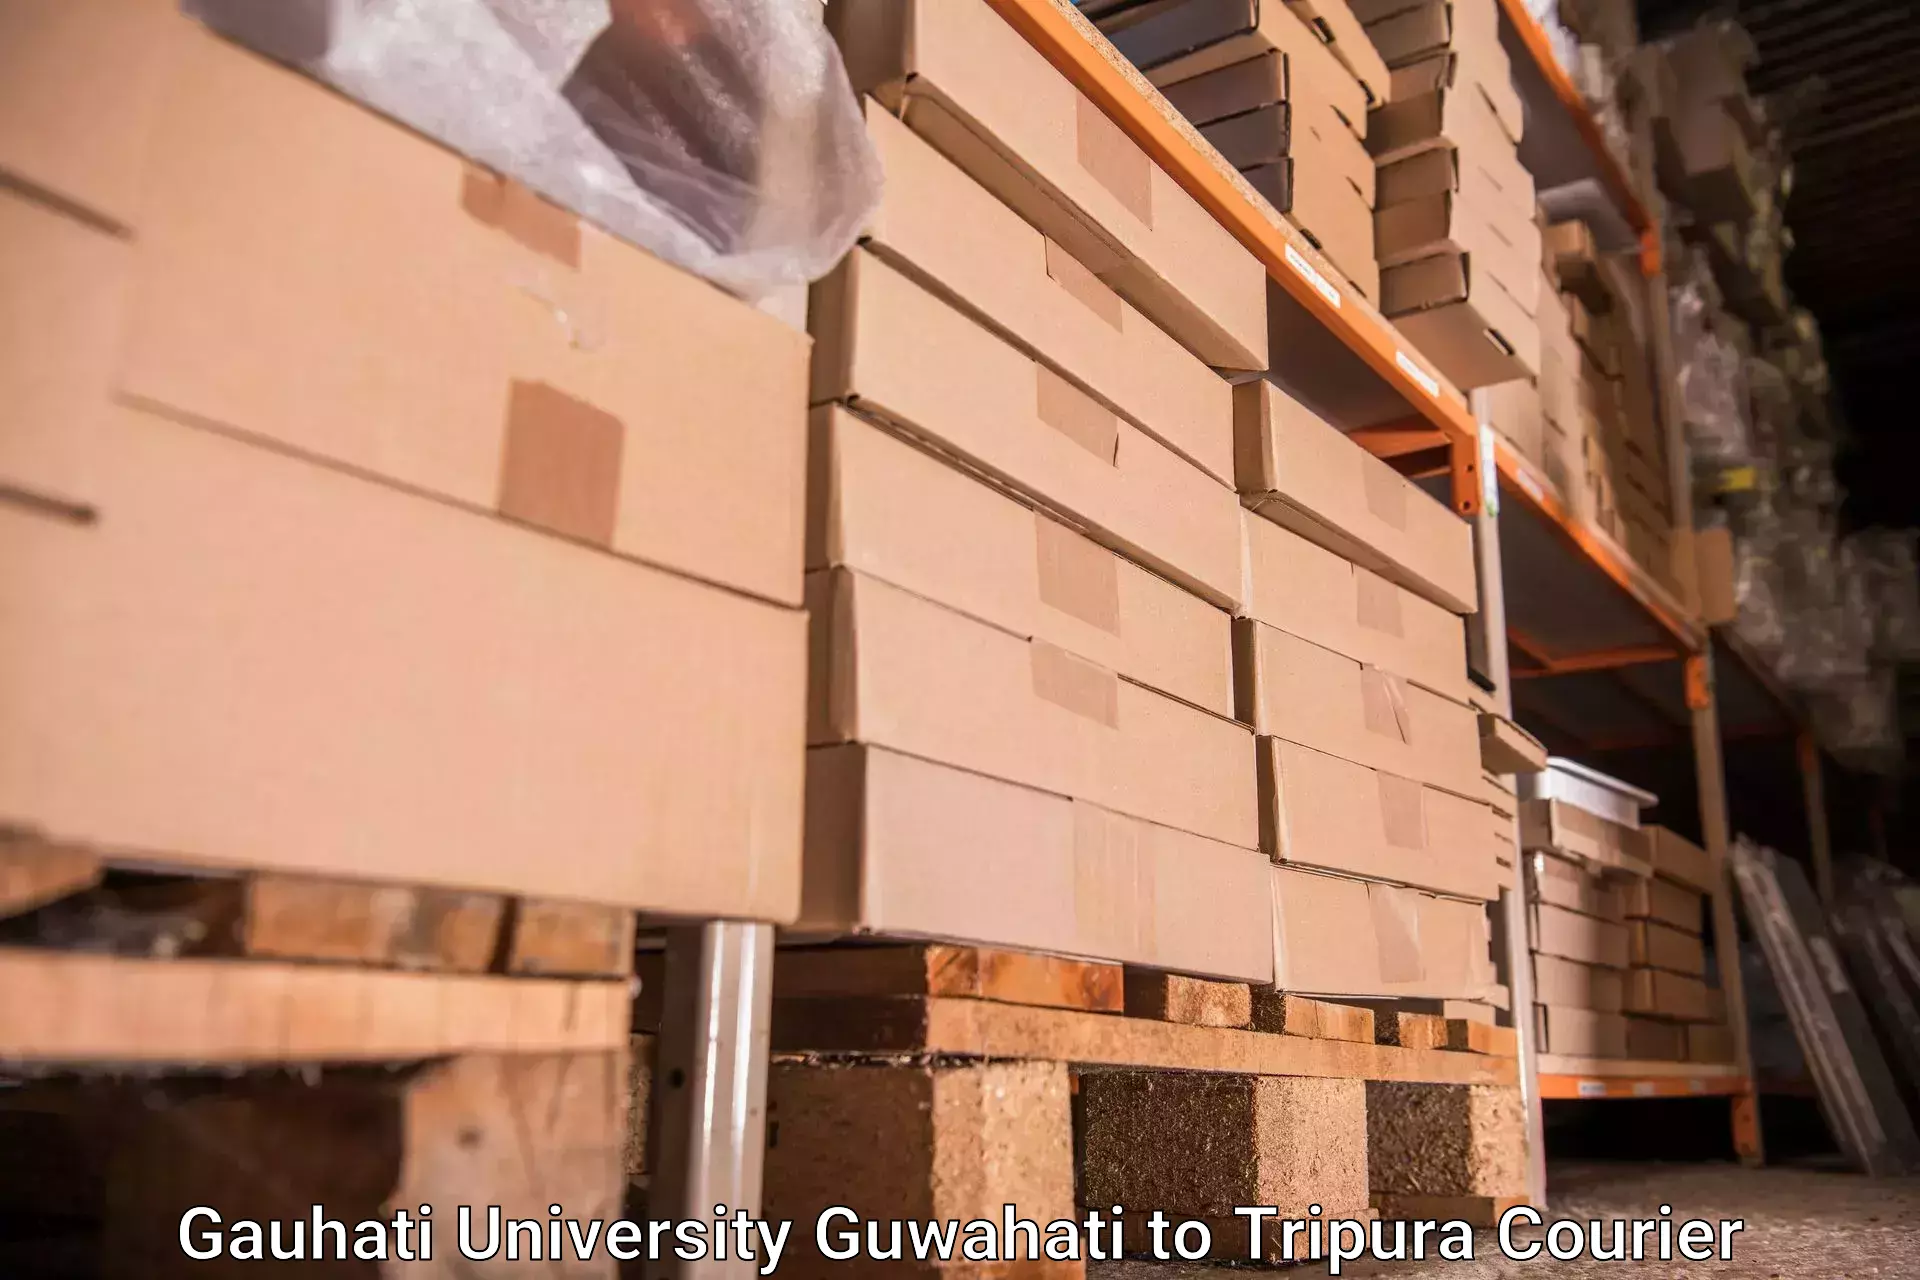 Baggage relocation service Gauhati University Guwahati to Amarpur